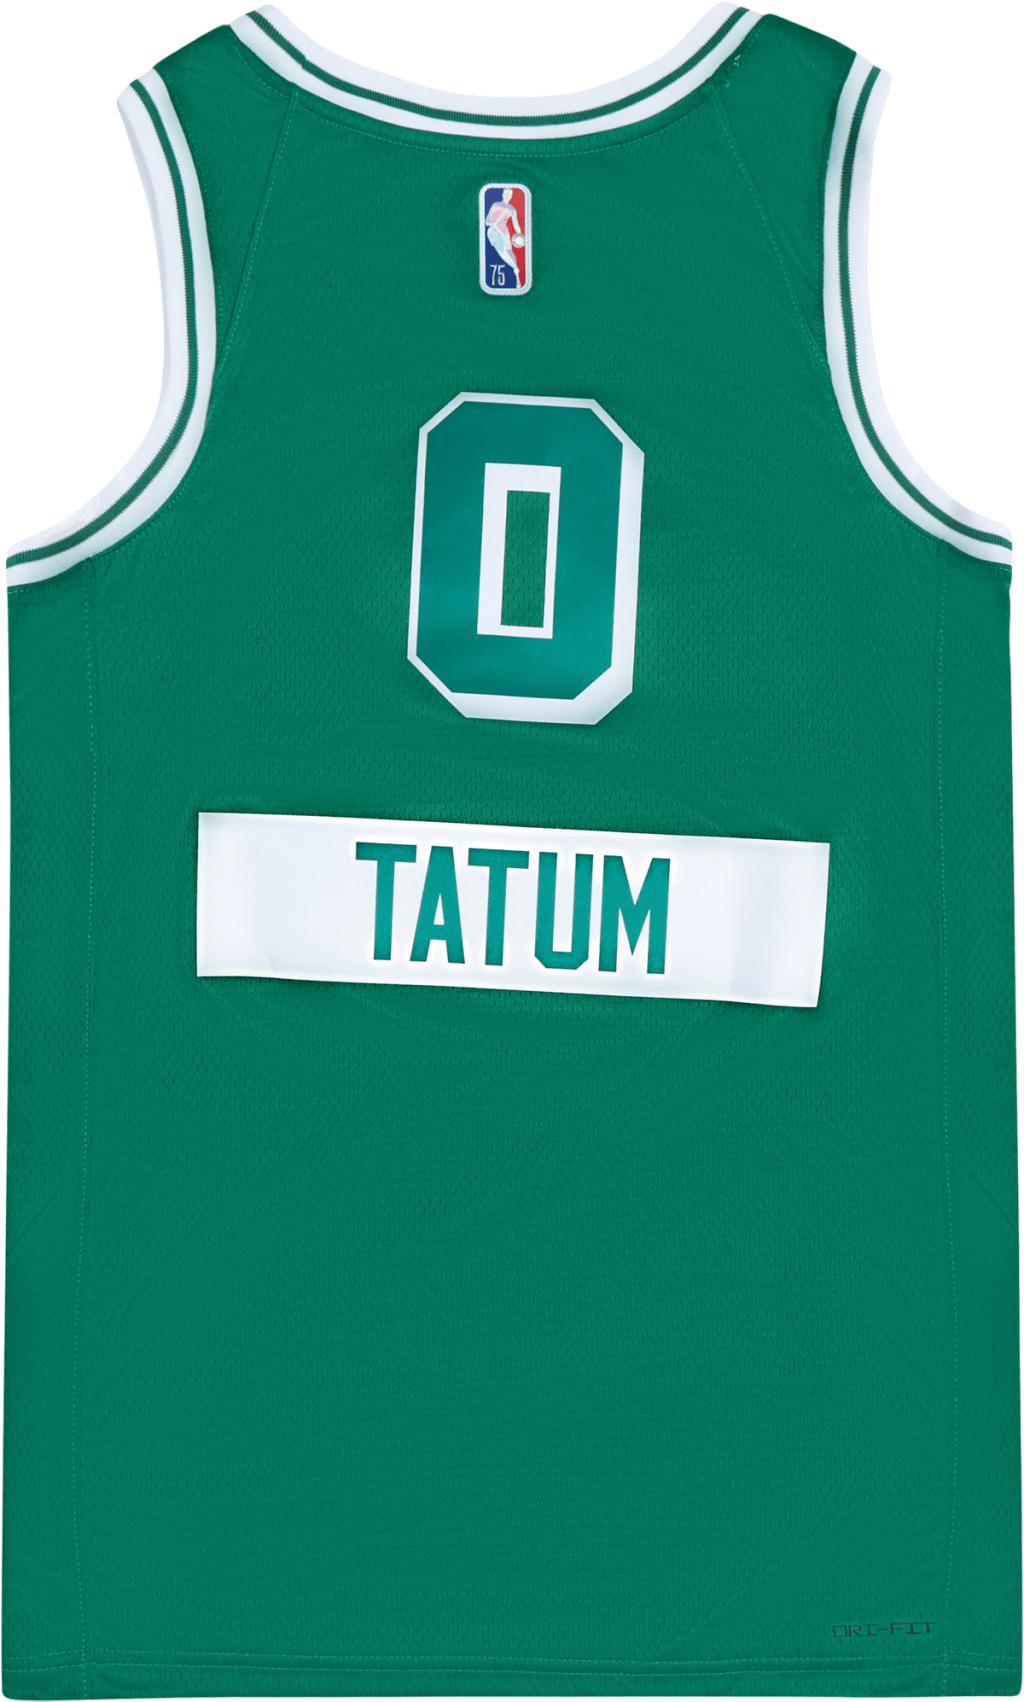 Celtics Swingman Jersey Mmt 21 Tatum Jayson